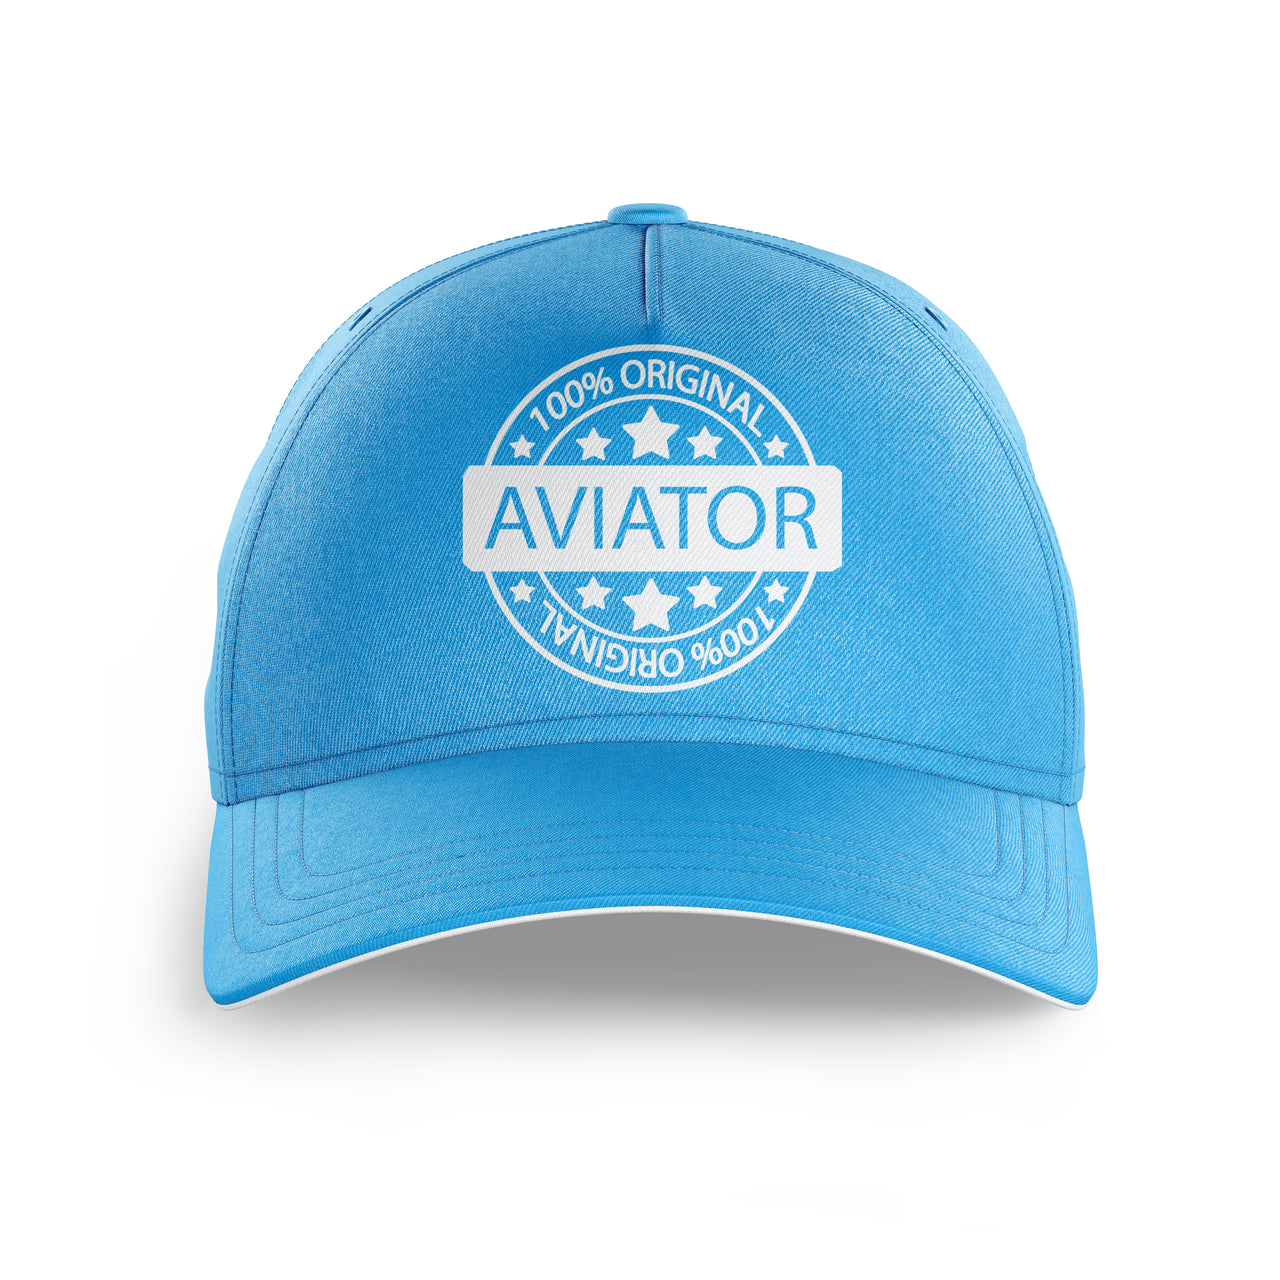 100 Original Aviator Printed Hats